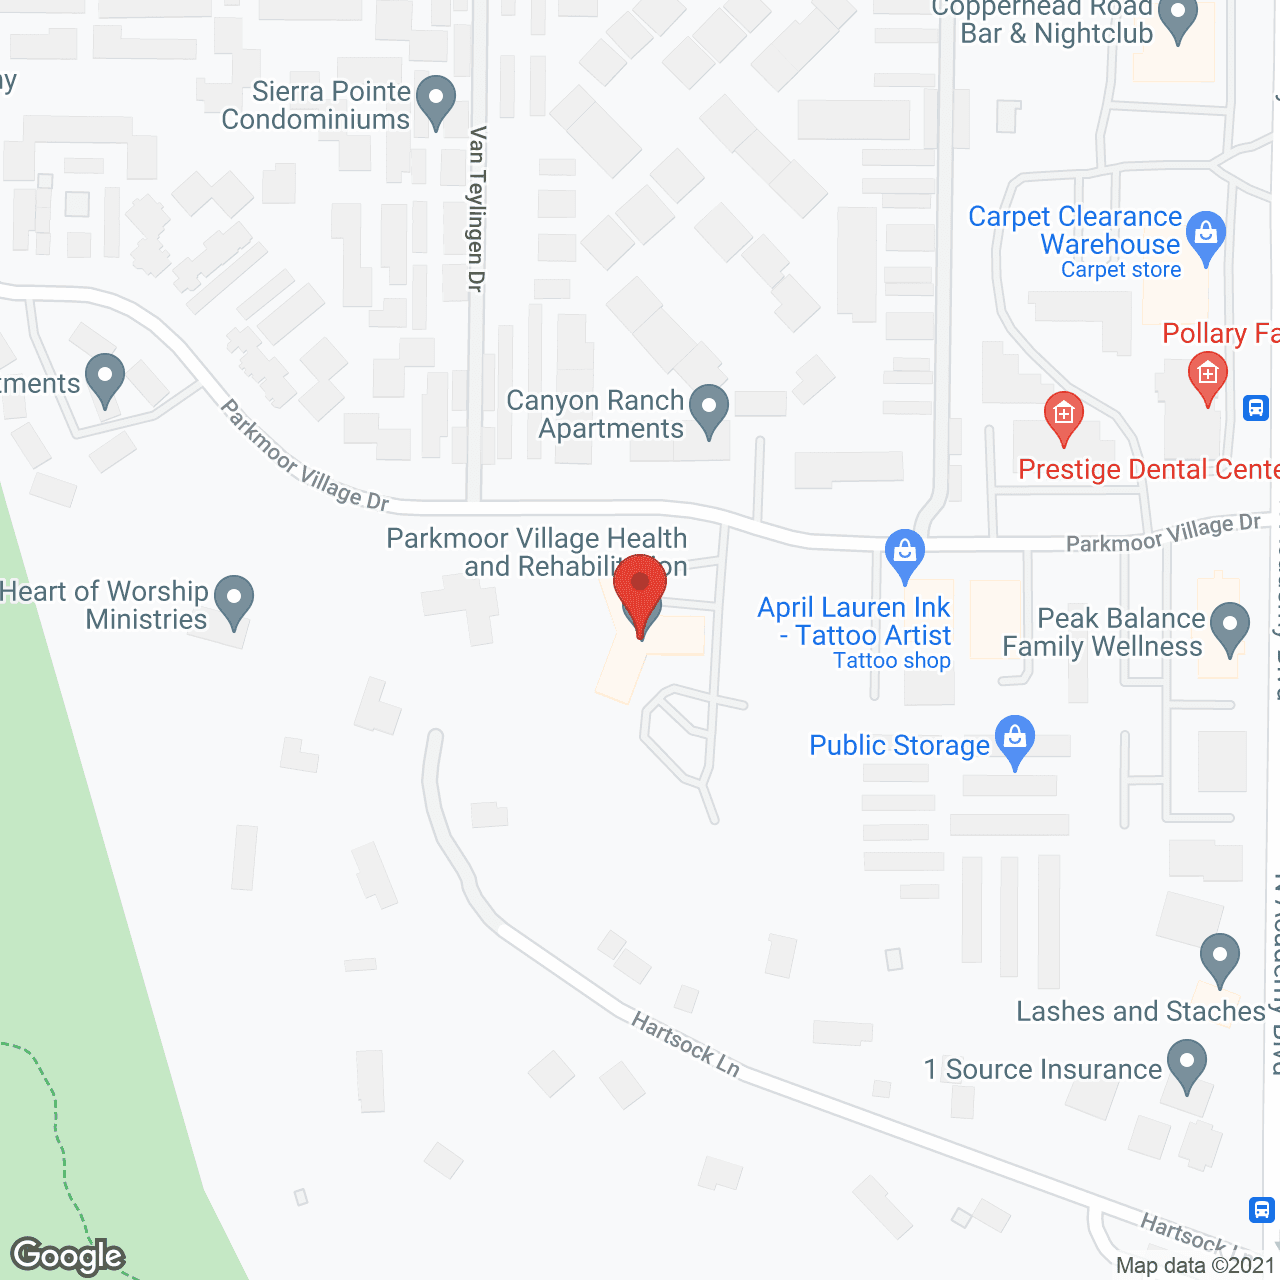 Parkmoor Village Care Center in google map